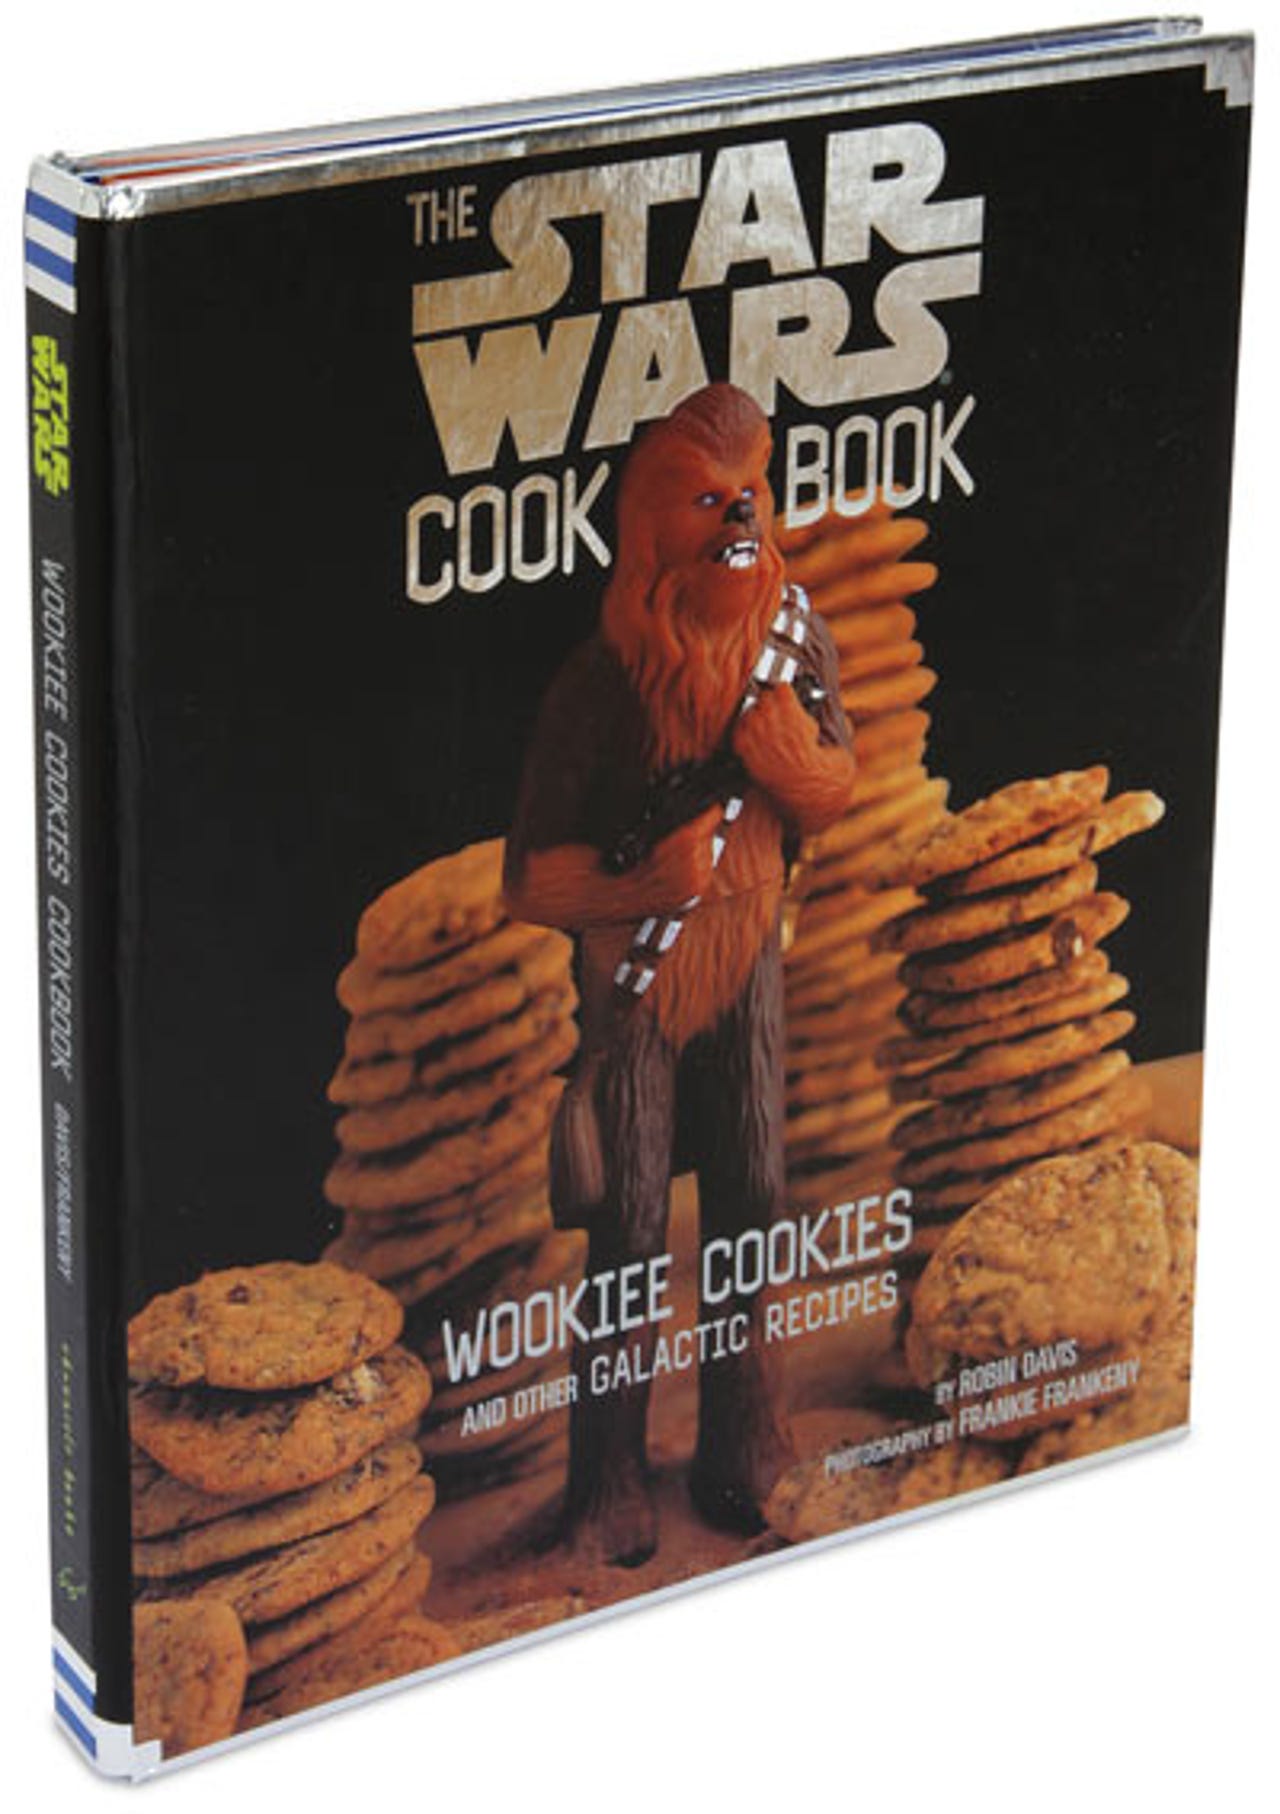 40153921-2-star-wars-cook-book.jpg